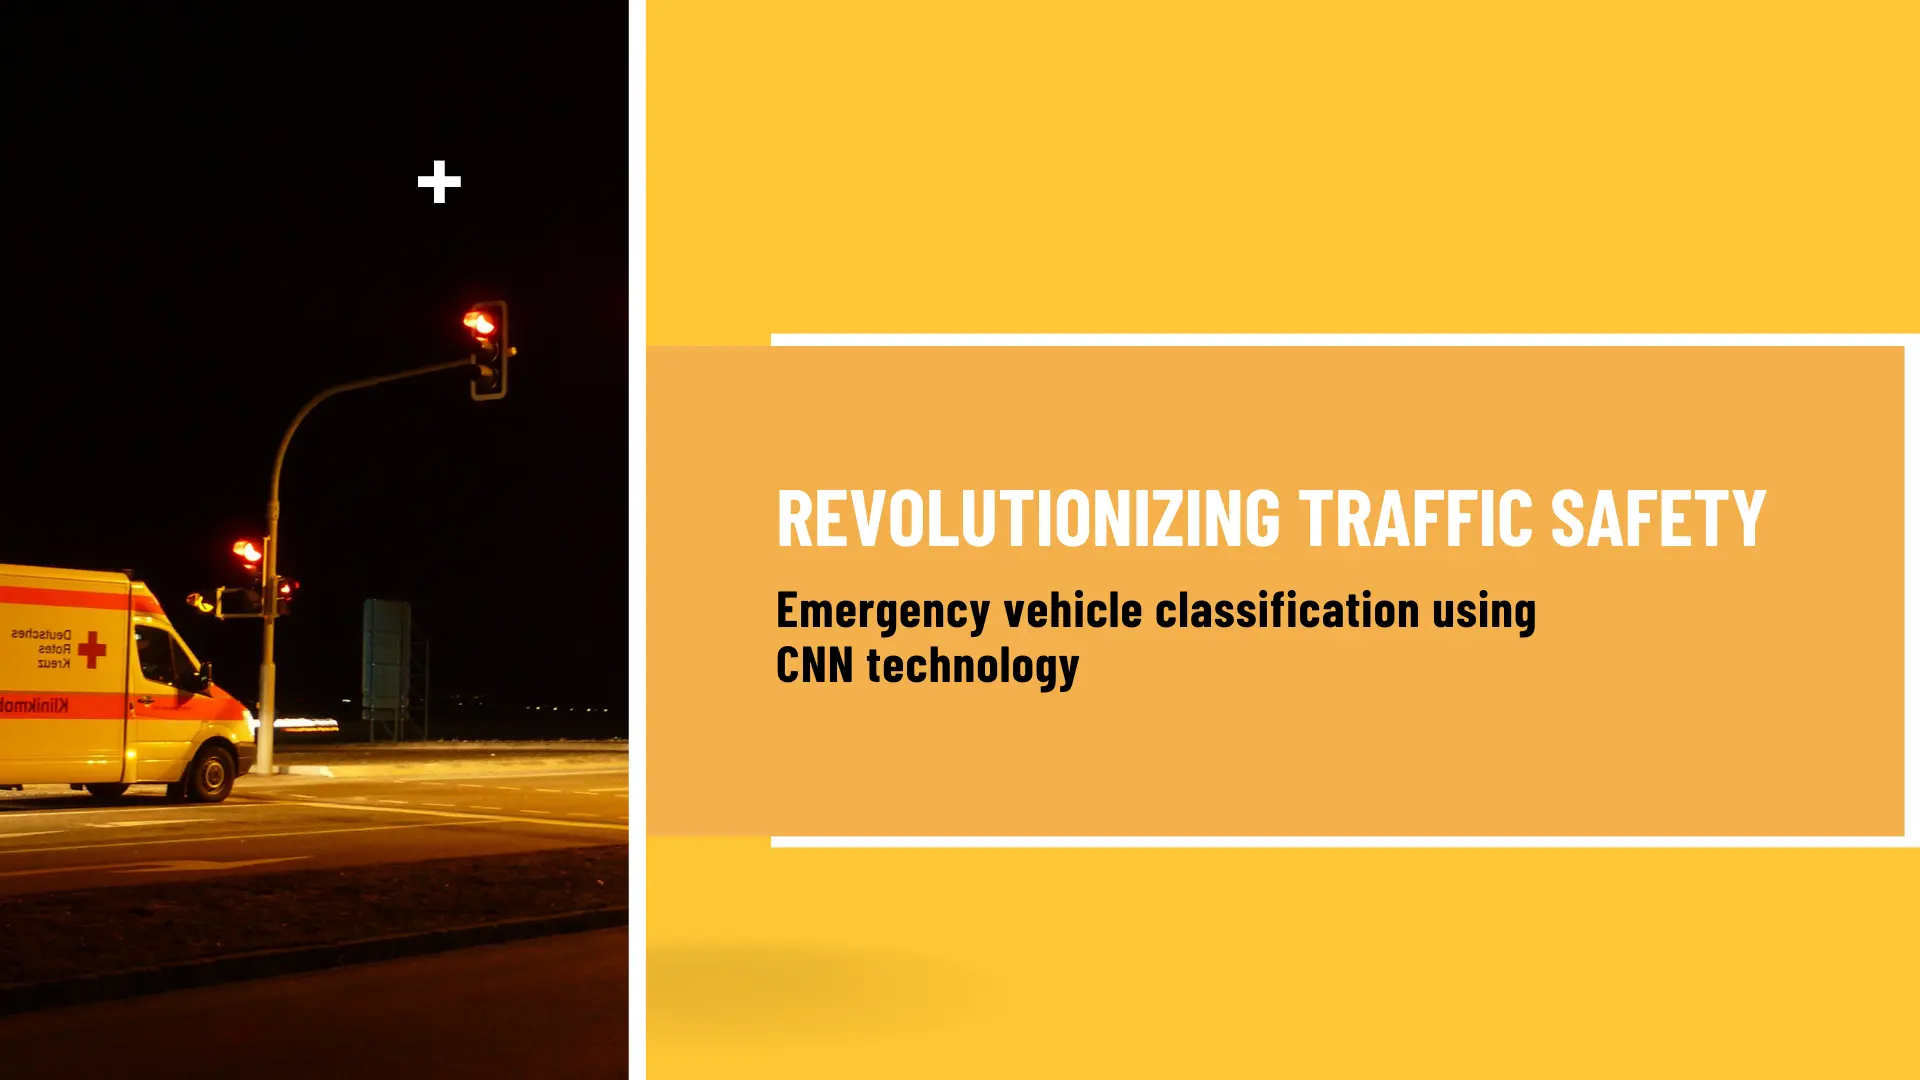 Revolutionizing traffic safety: emergency vehicle classification using CNN technology